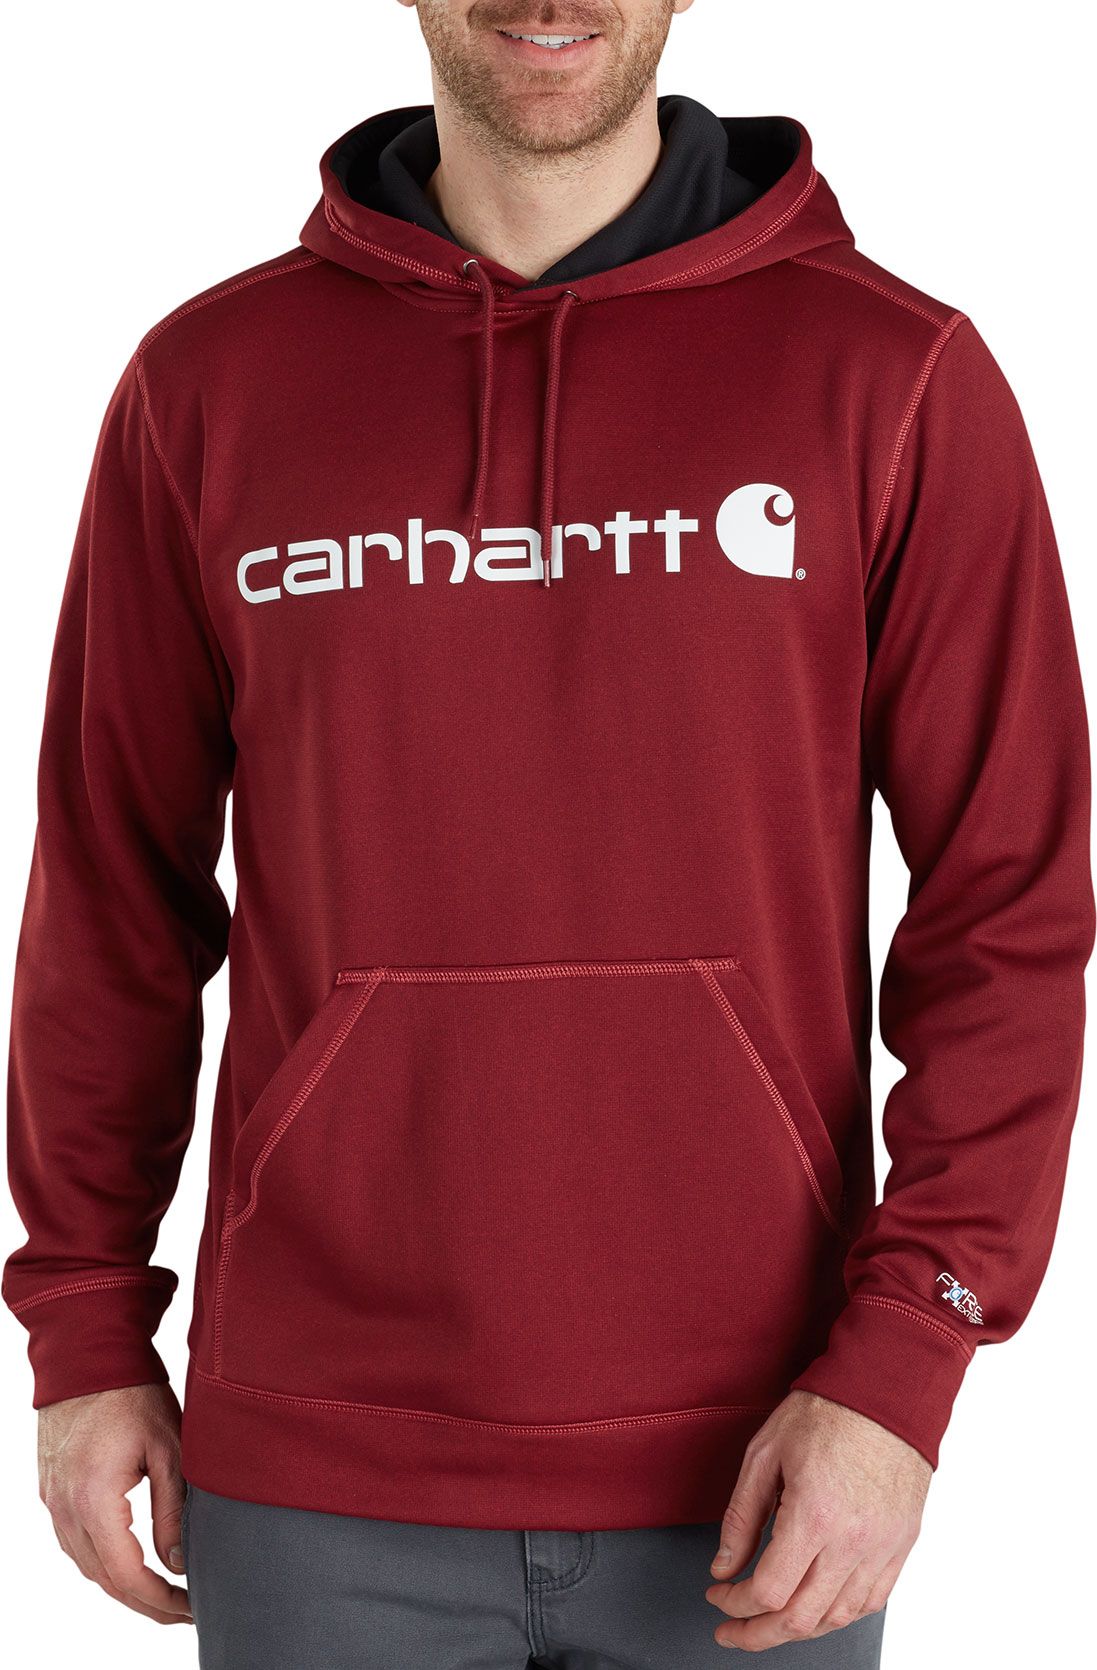 carhartt extreme hoodie